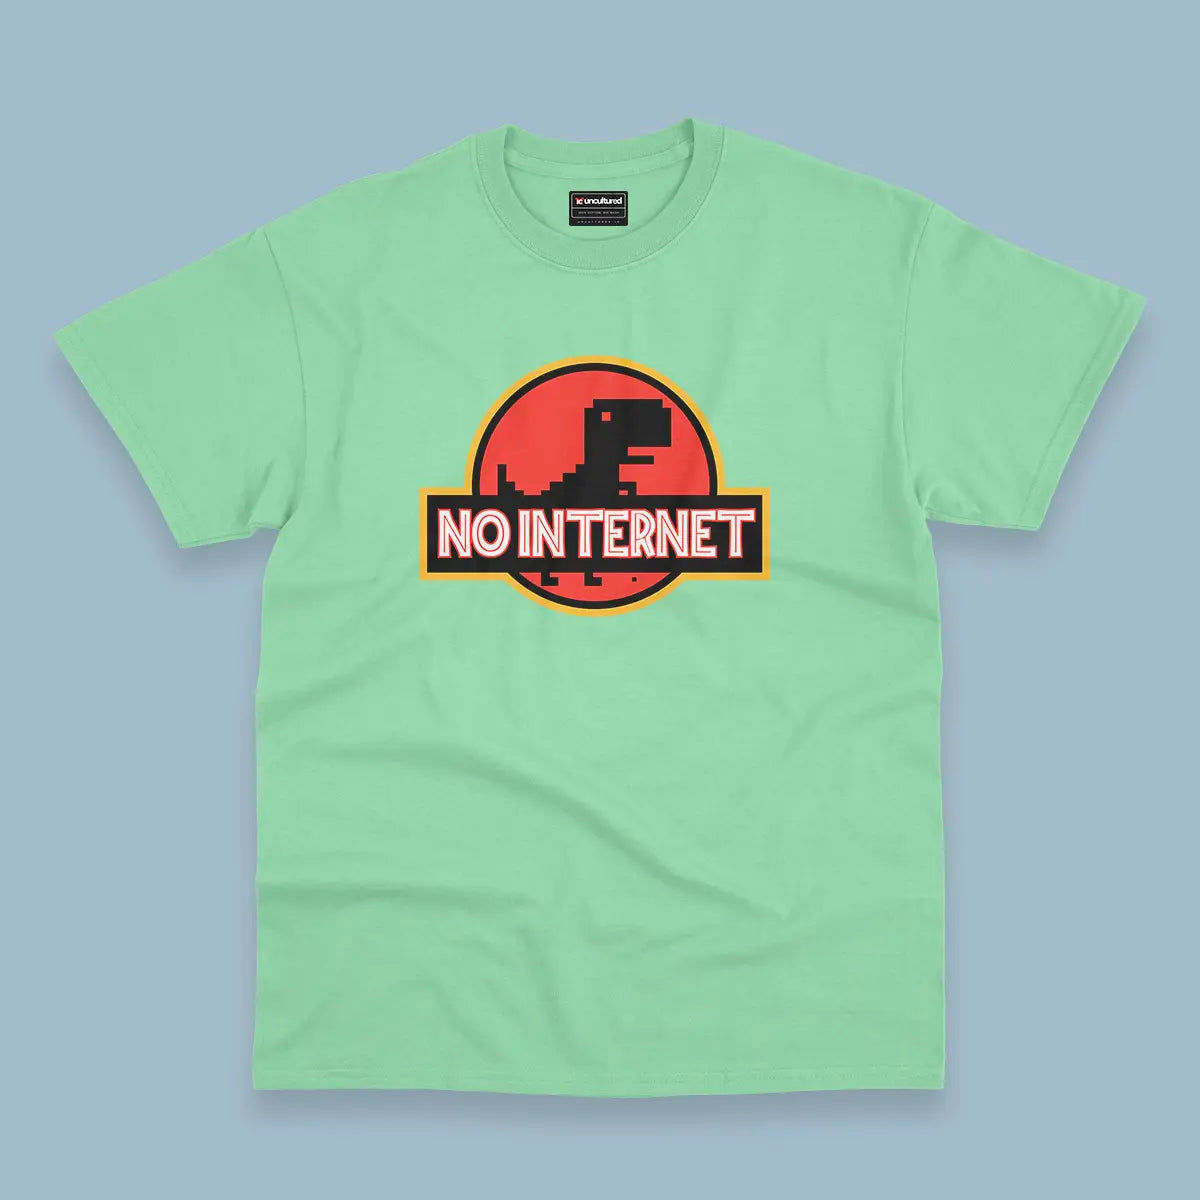 No internet - Oversized